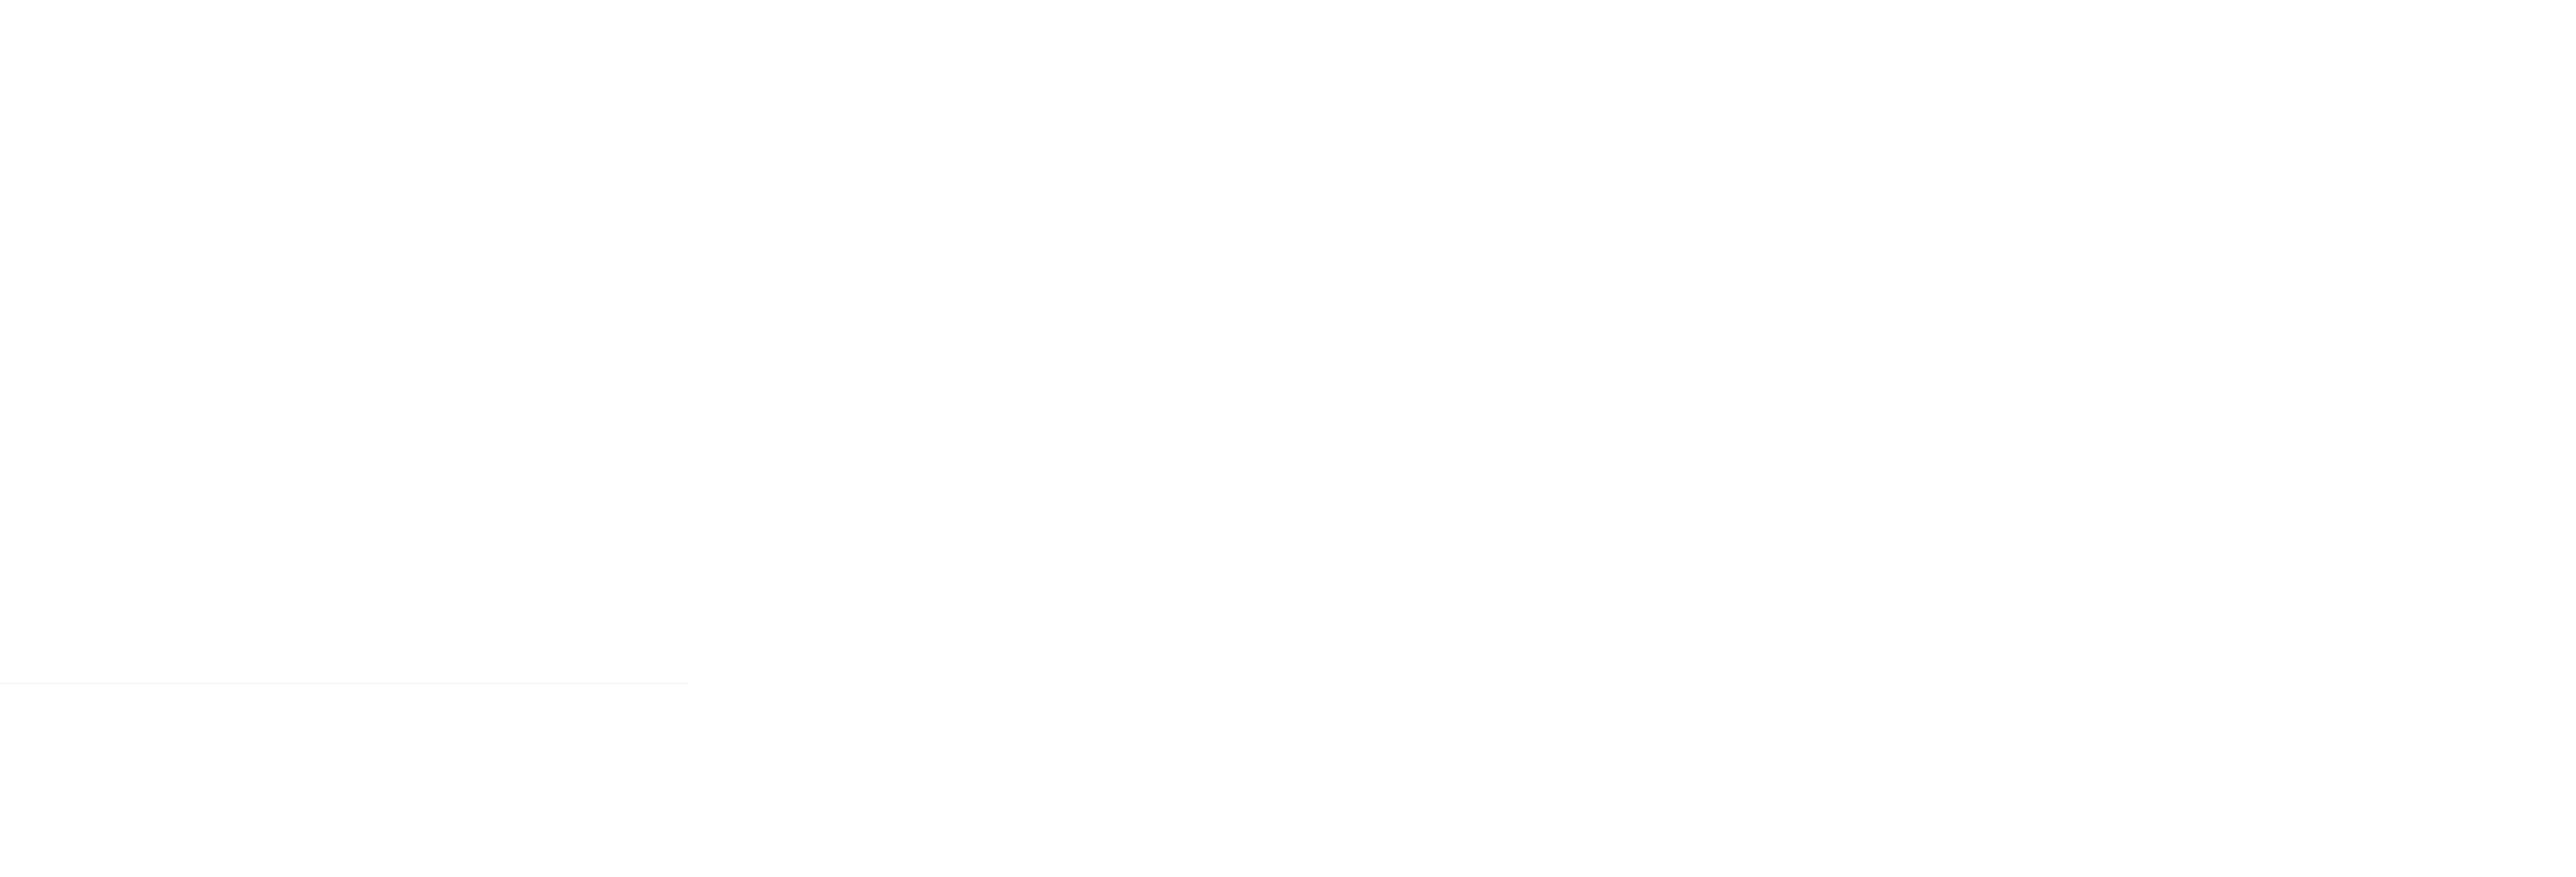 Cgs Logo White